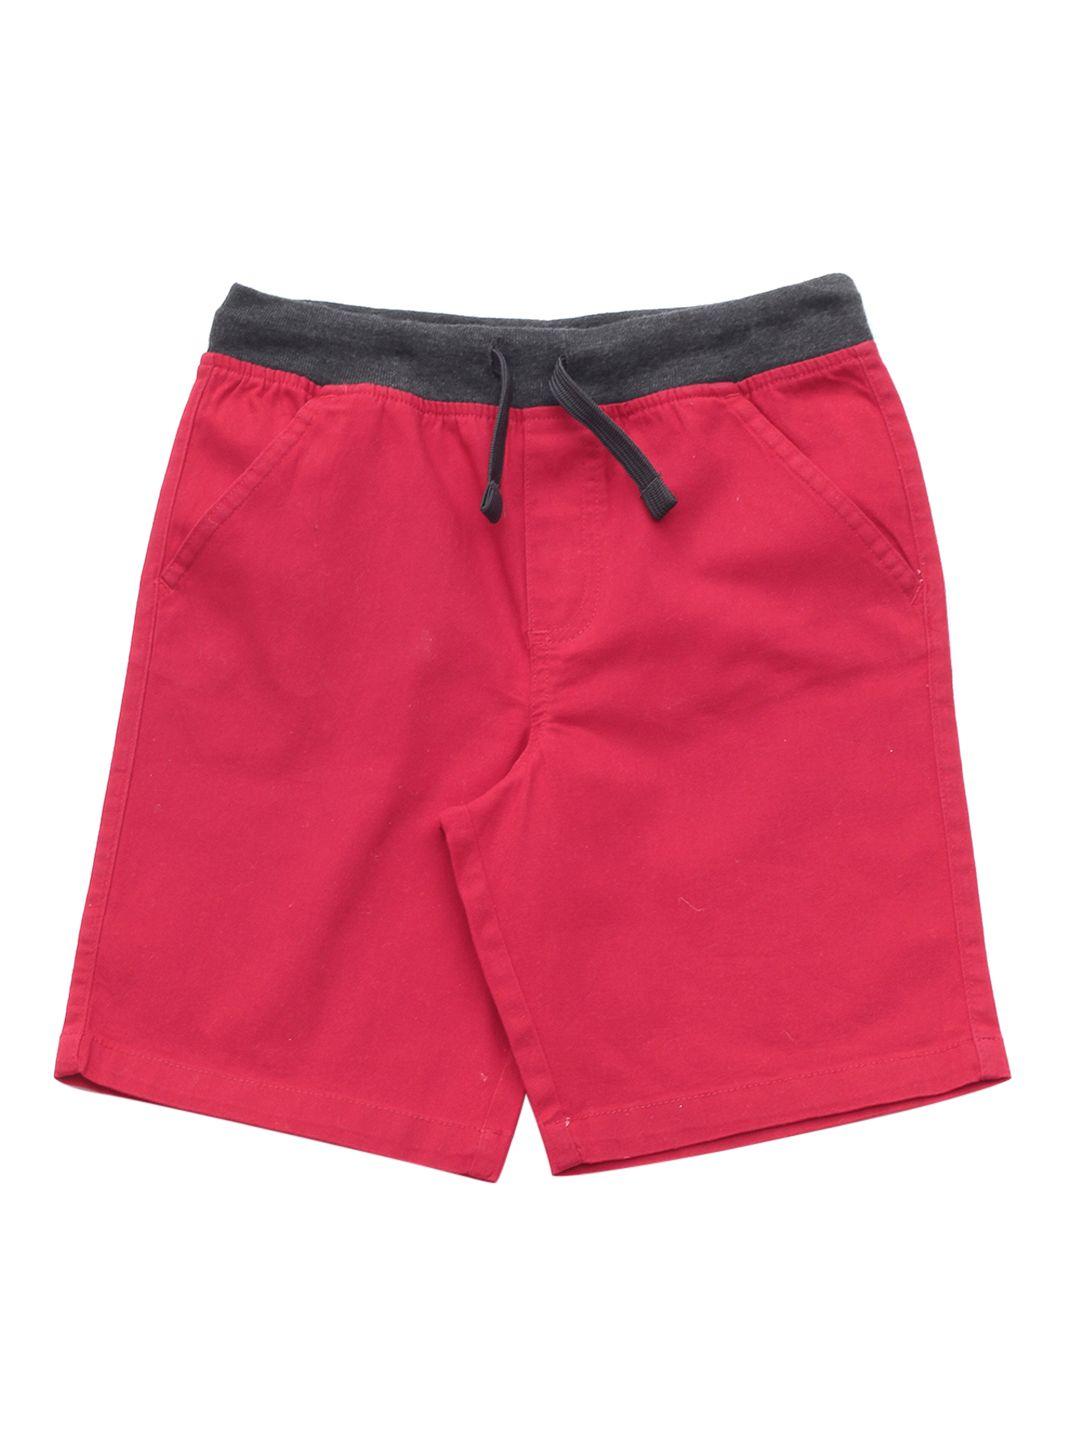 lil lollipop unisex kids red shorts